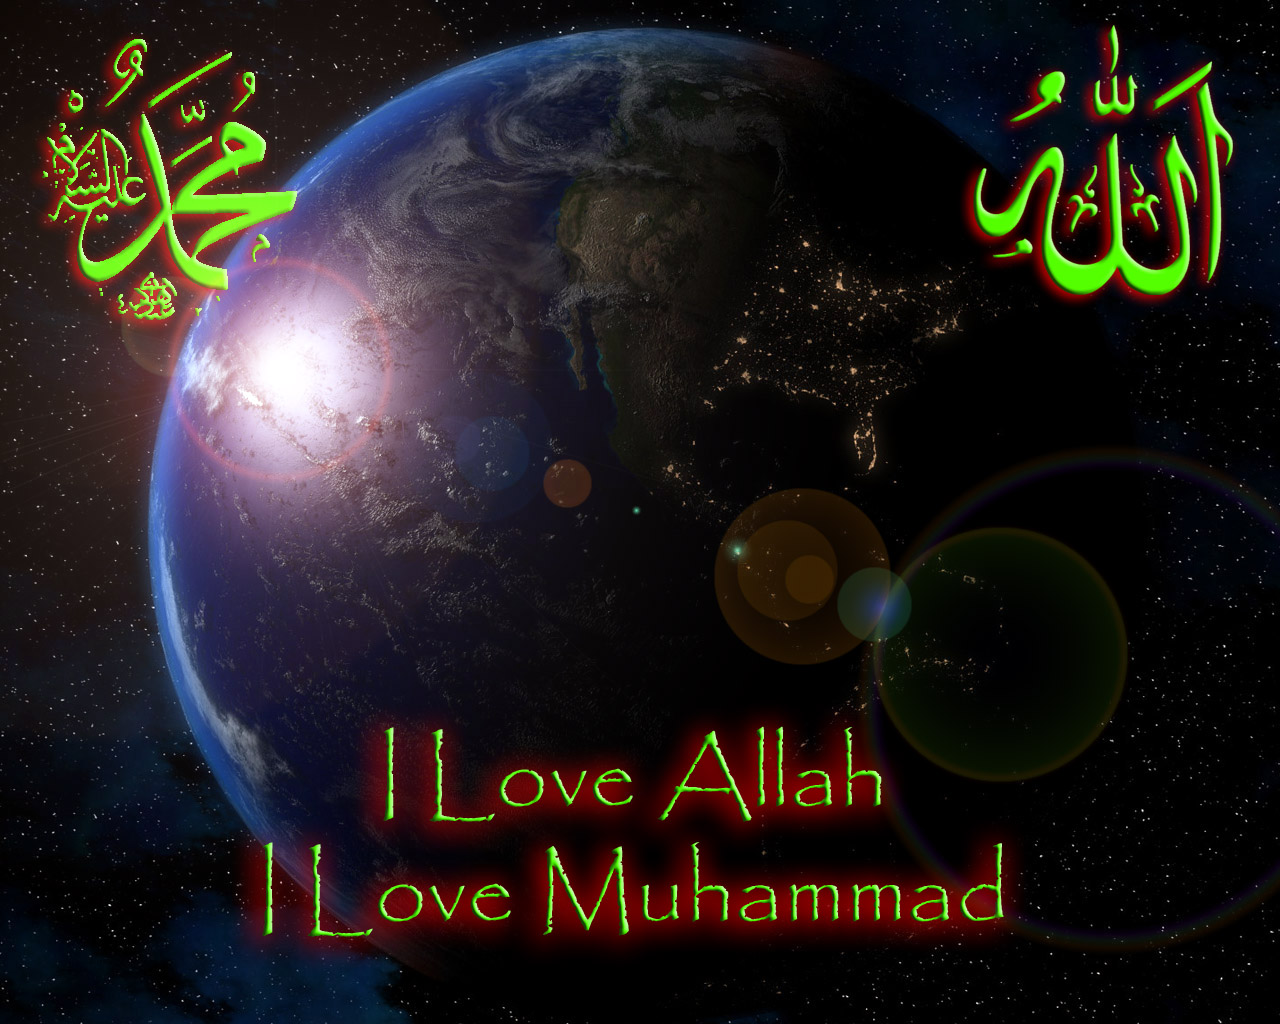 http://3.bp.blogspot.com/-PbvjRoYDV2A/UIPzwsXmQgI/AAAAAAAAAAg/t4VNbldrTsg/s1600/Wallpaper+Kaligrafi+Islami.jpg